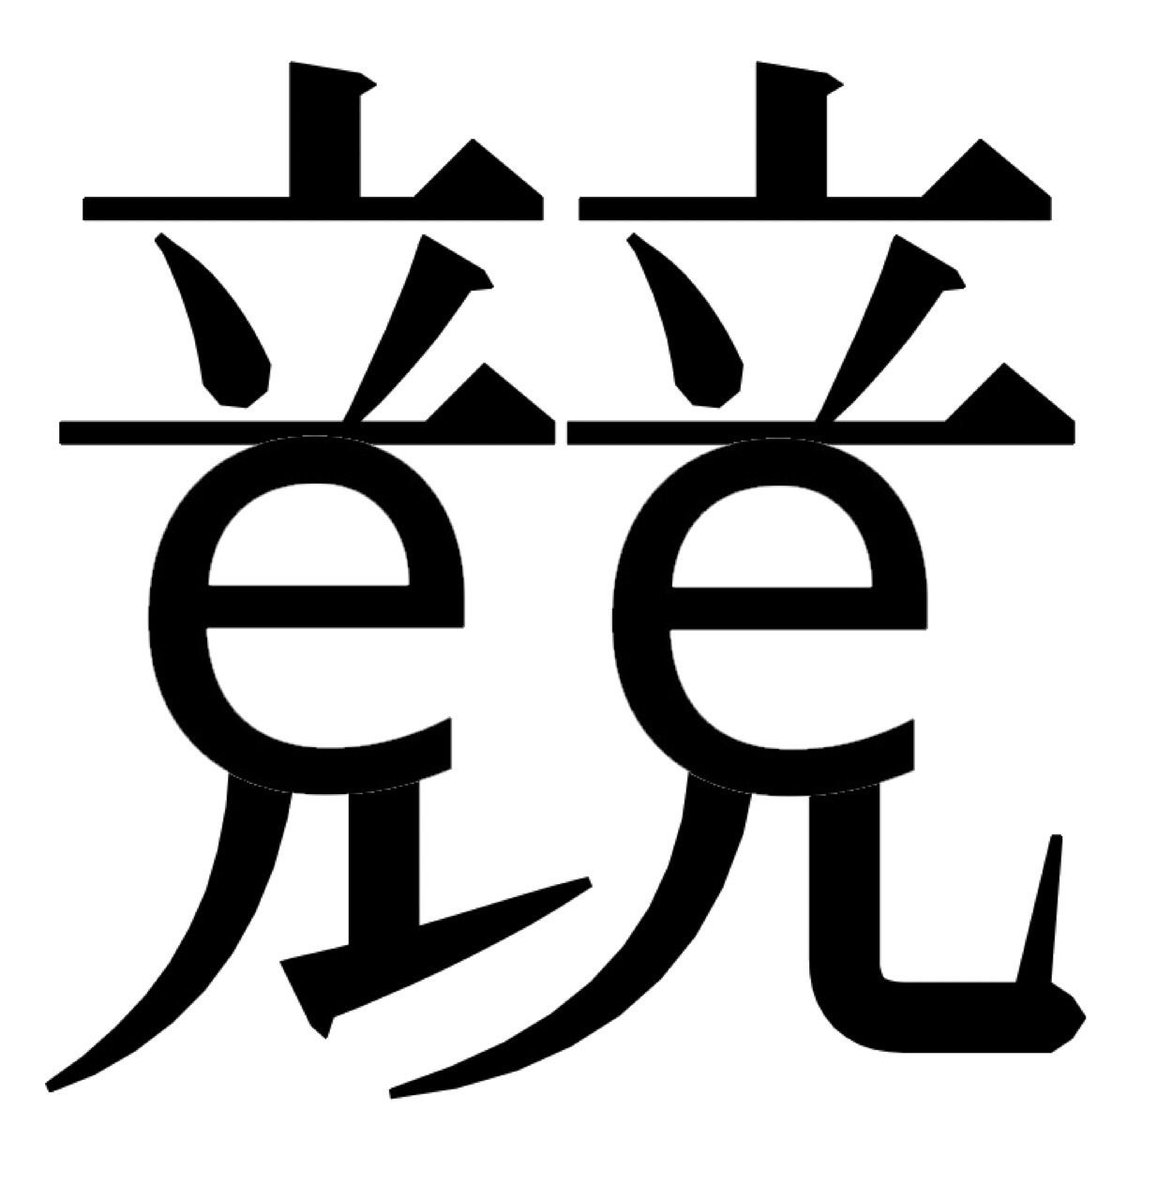 ট ইট র マップちゅーん ソフマップ公式 新漢字を作成しました 読み方は Eスポーツ これ気に入った人は使ってくださいー 漢字 マップちゅーん Eスポーツ Softmap Pubg Esportsakiba